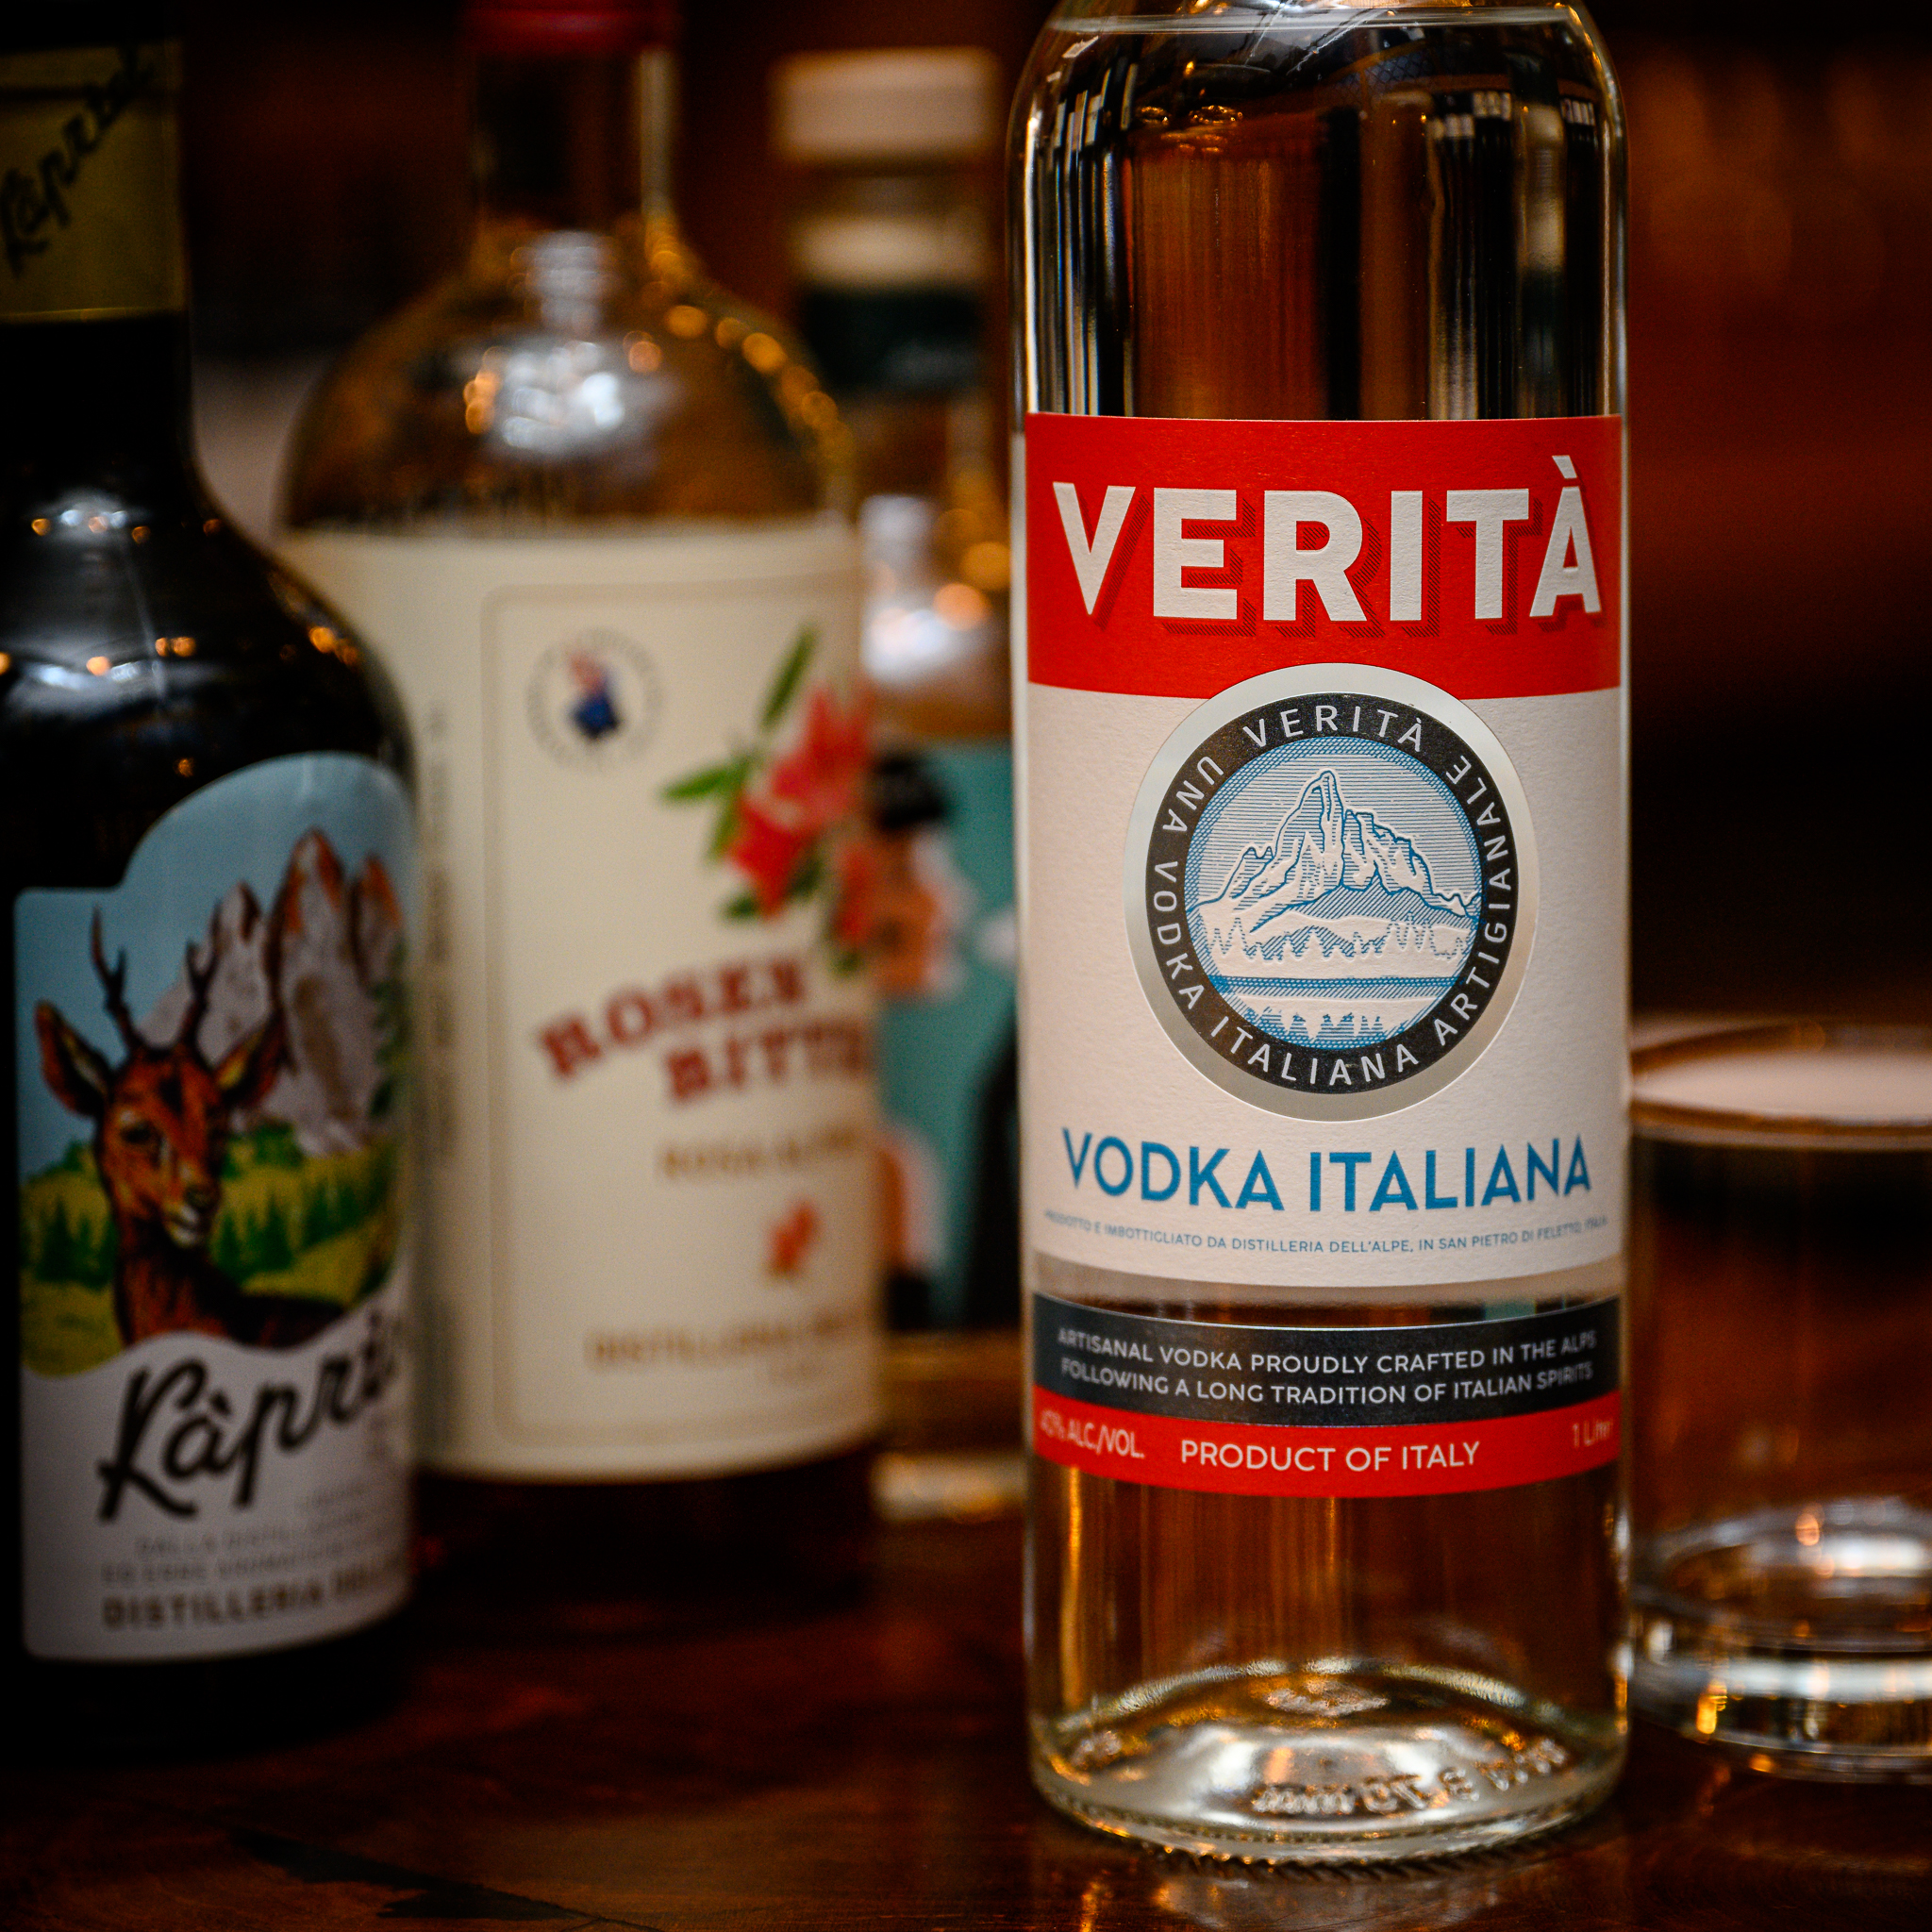 Bottle of Verita vodka